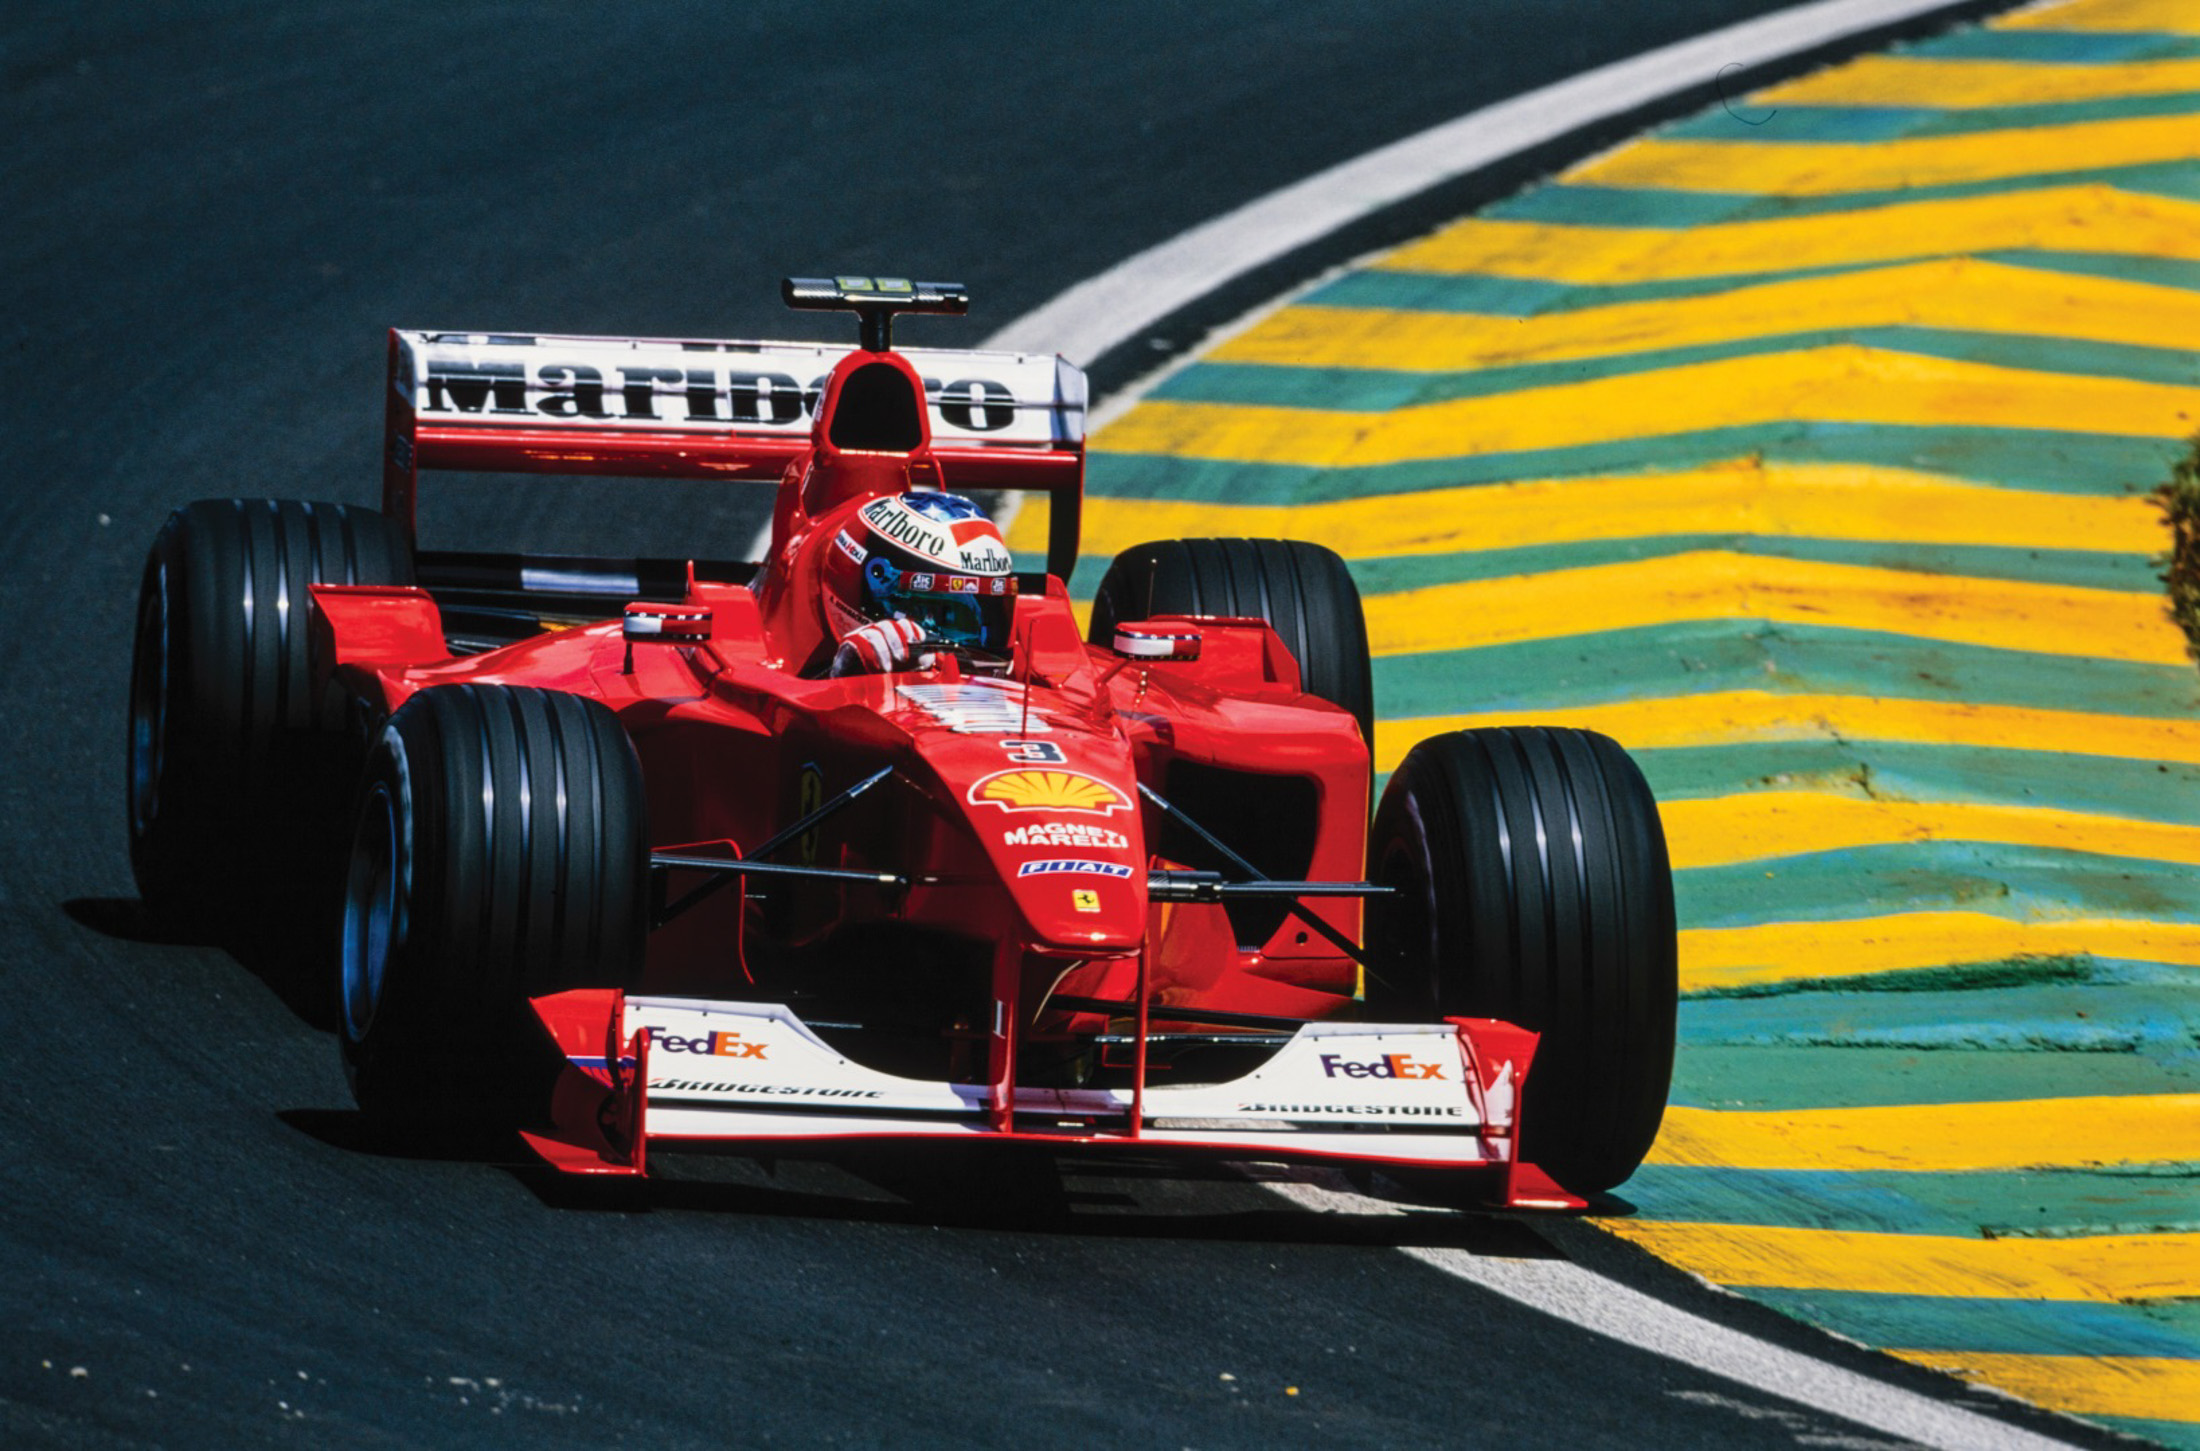 Michael Schumachers $9.5 Million F1 Ferrari Is Tip of Valuable Race Car Market